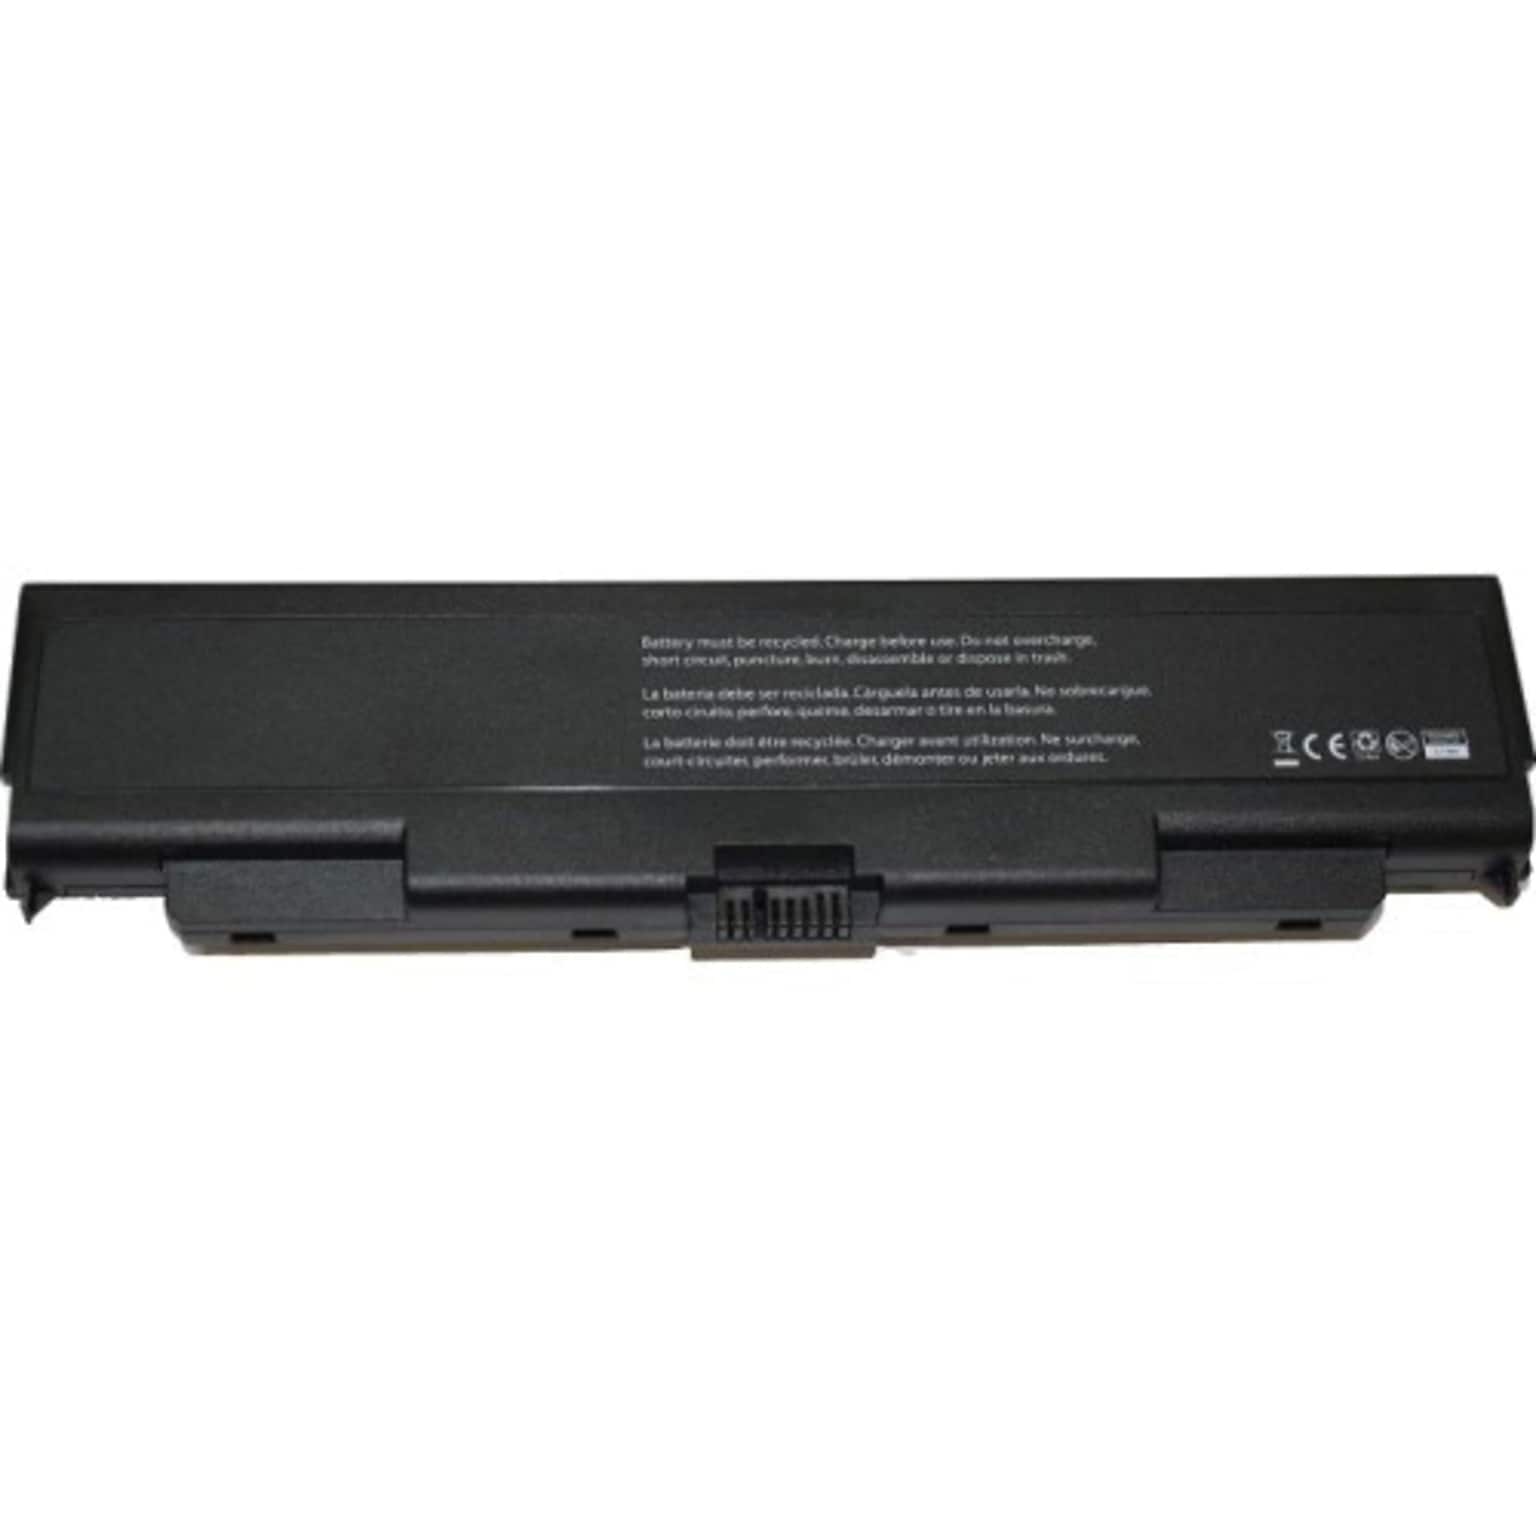 V7® 10.8 VDC Lithium Ion Battery for Lenovo ThinkPad T440P Notebook, 5200 mAh (IBM-T440X6-V7)